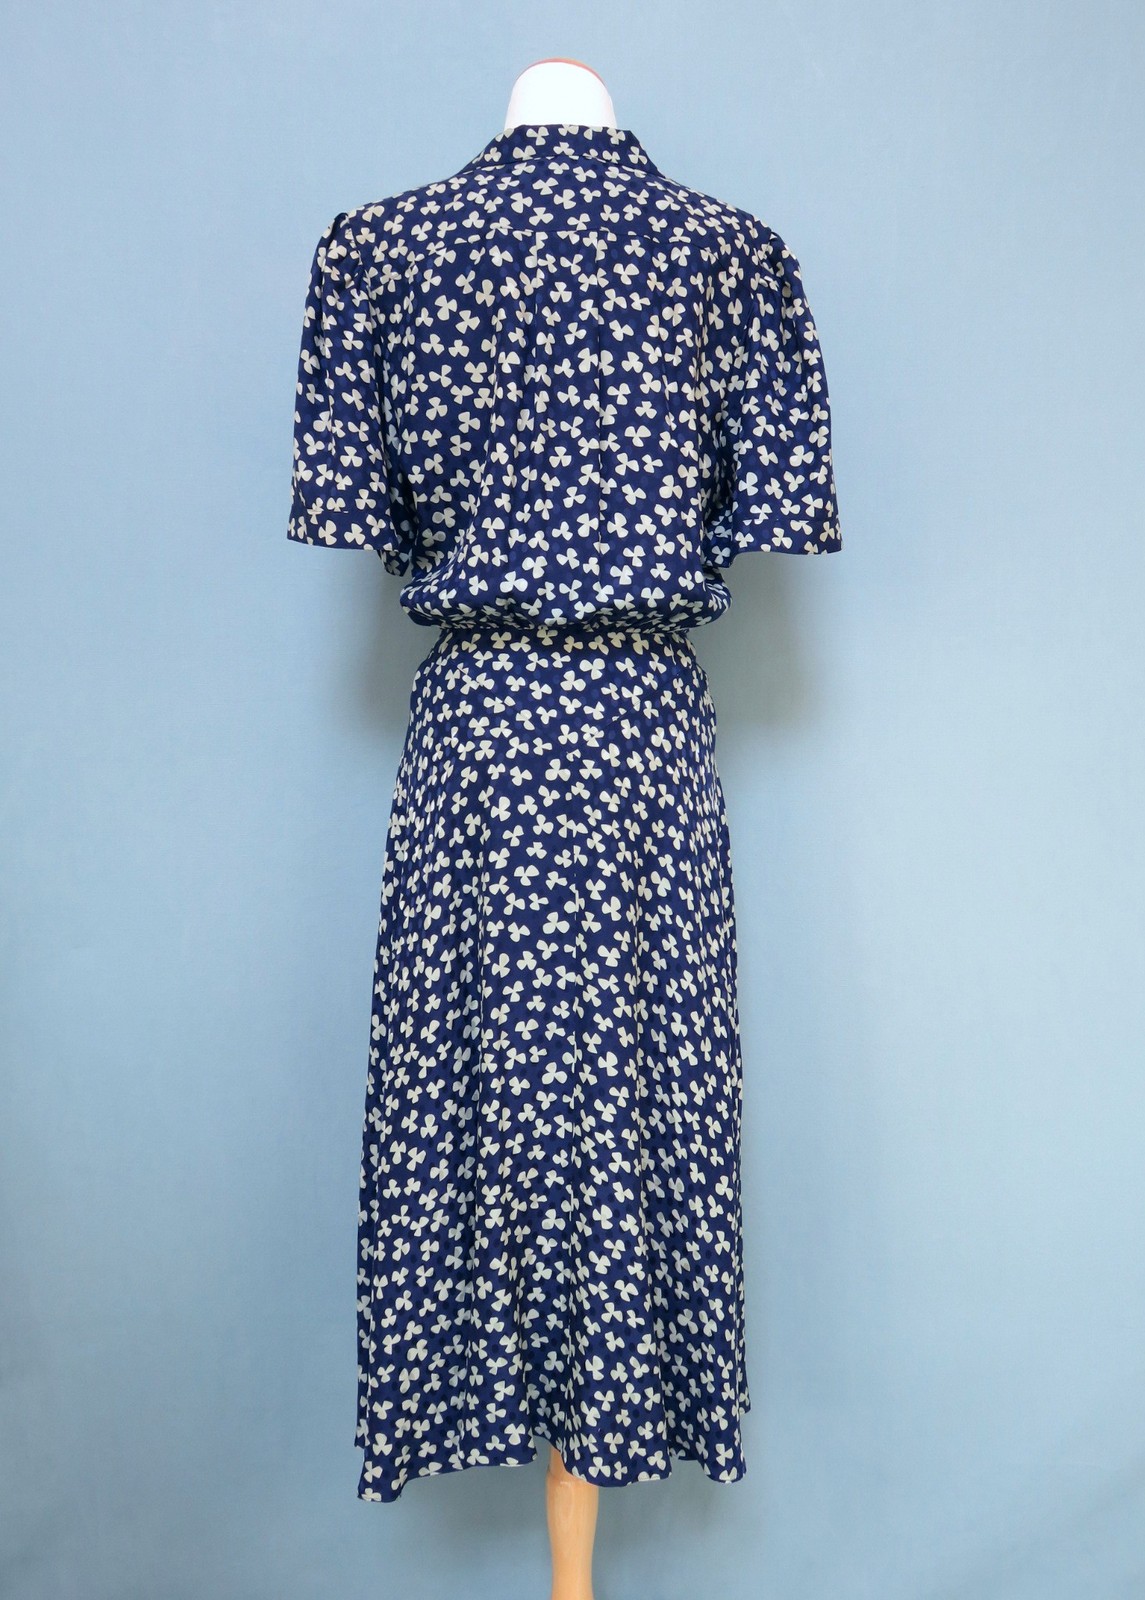 Blue Floral Dress - 1940s Style - Blue Dress - Vintage - Dresses